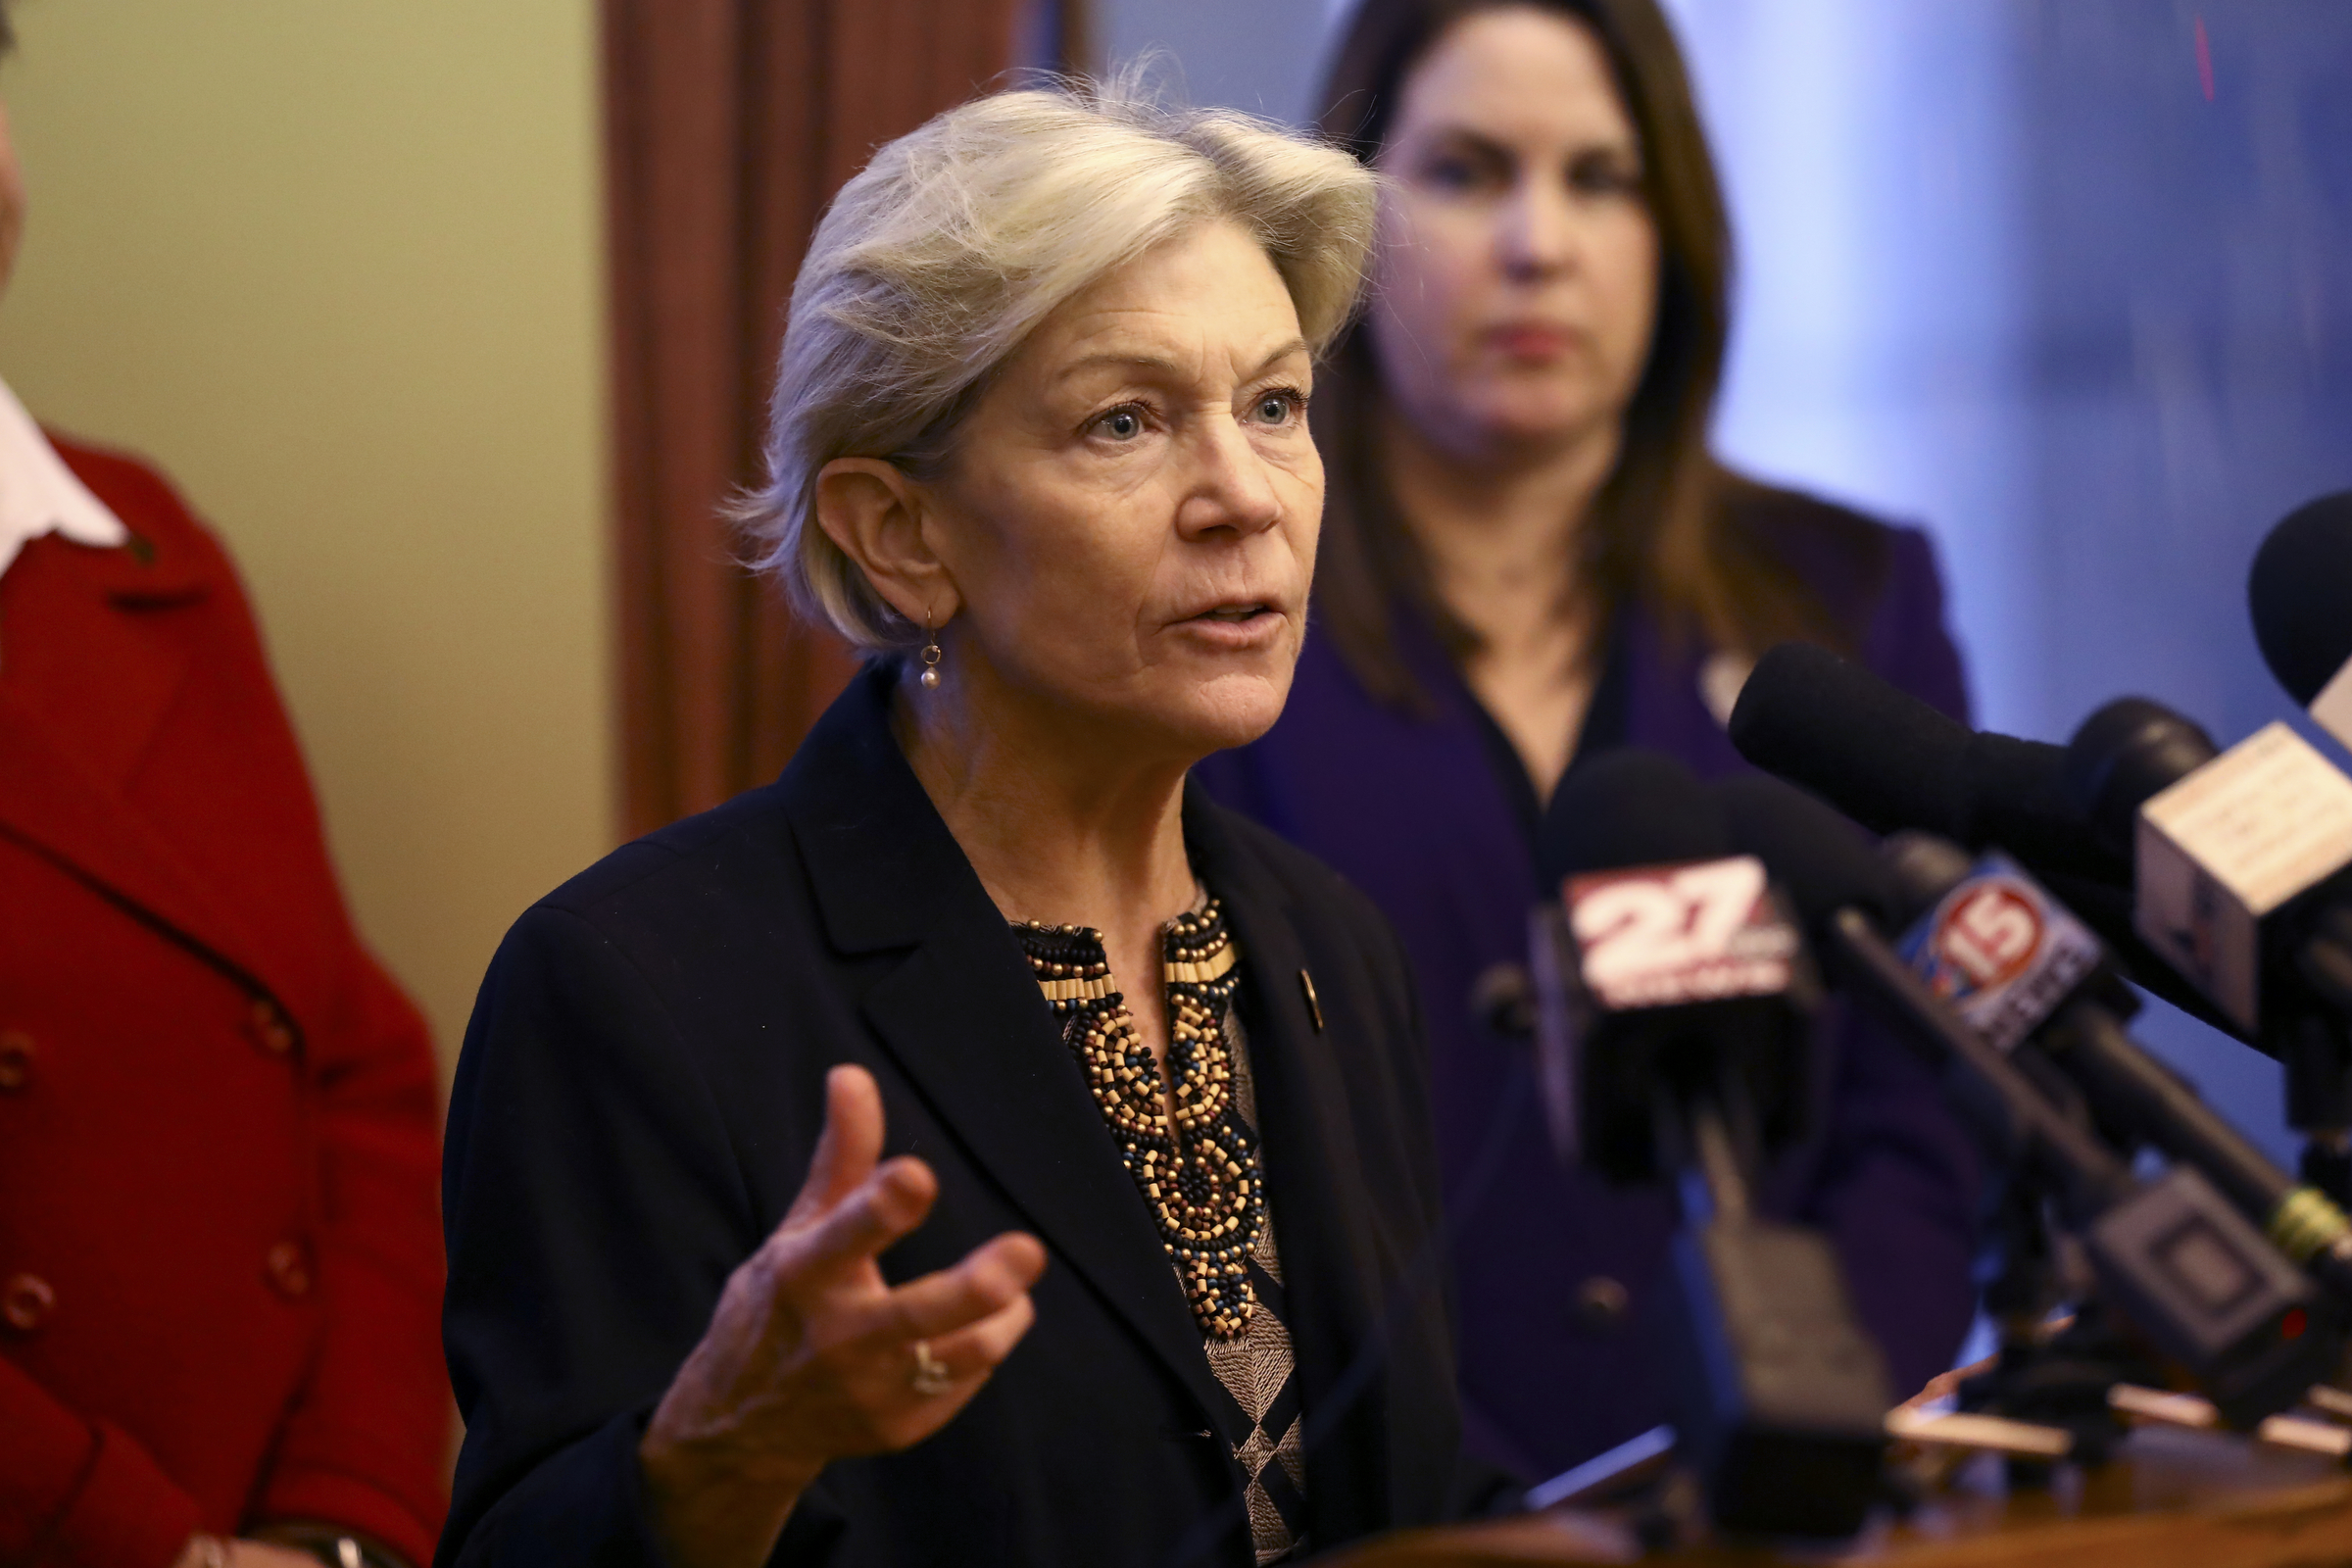 Wisconsin Senate Minority Leader Janet Bewley involved in fatal crash